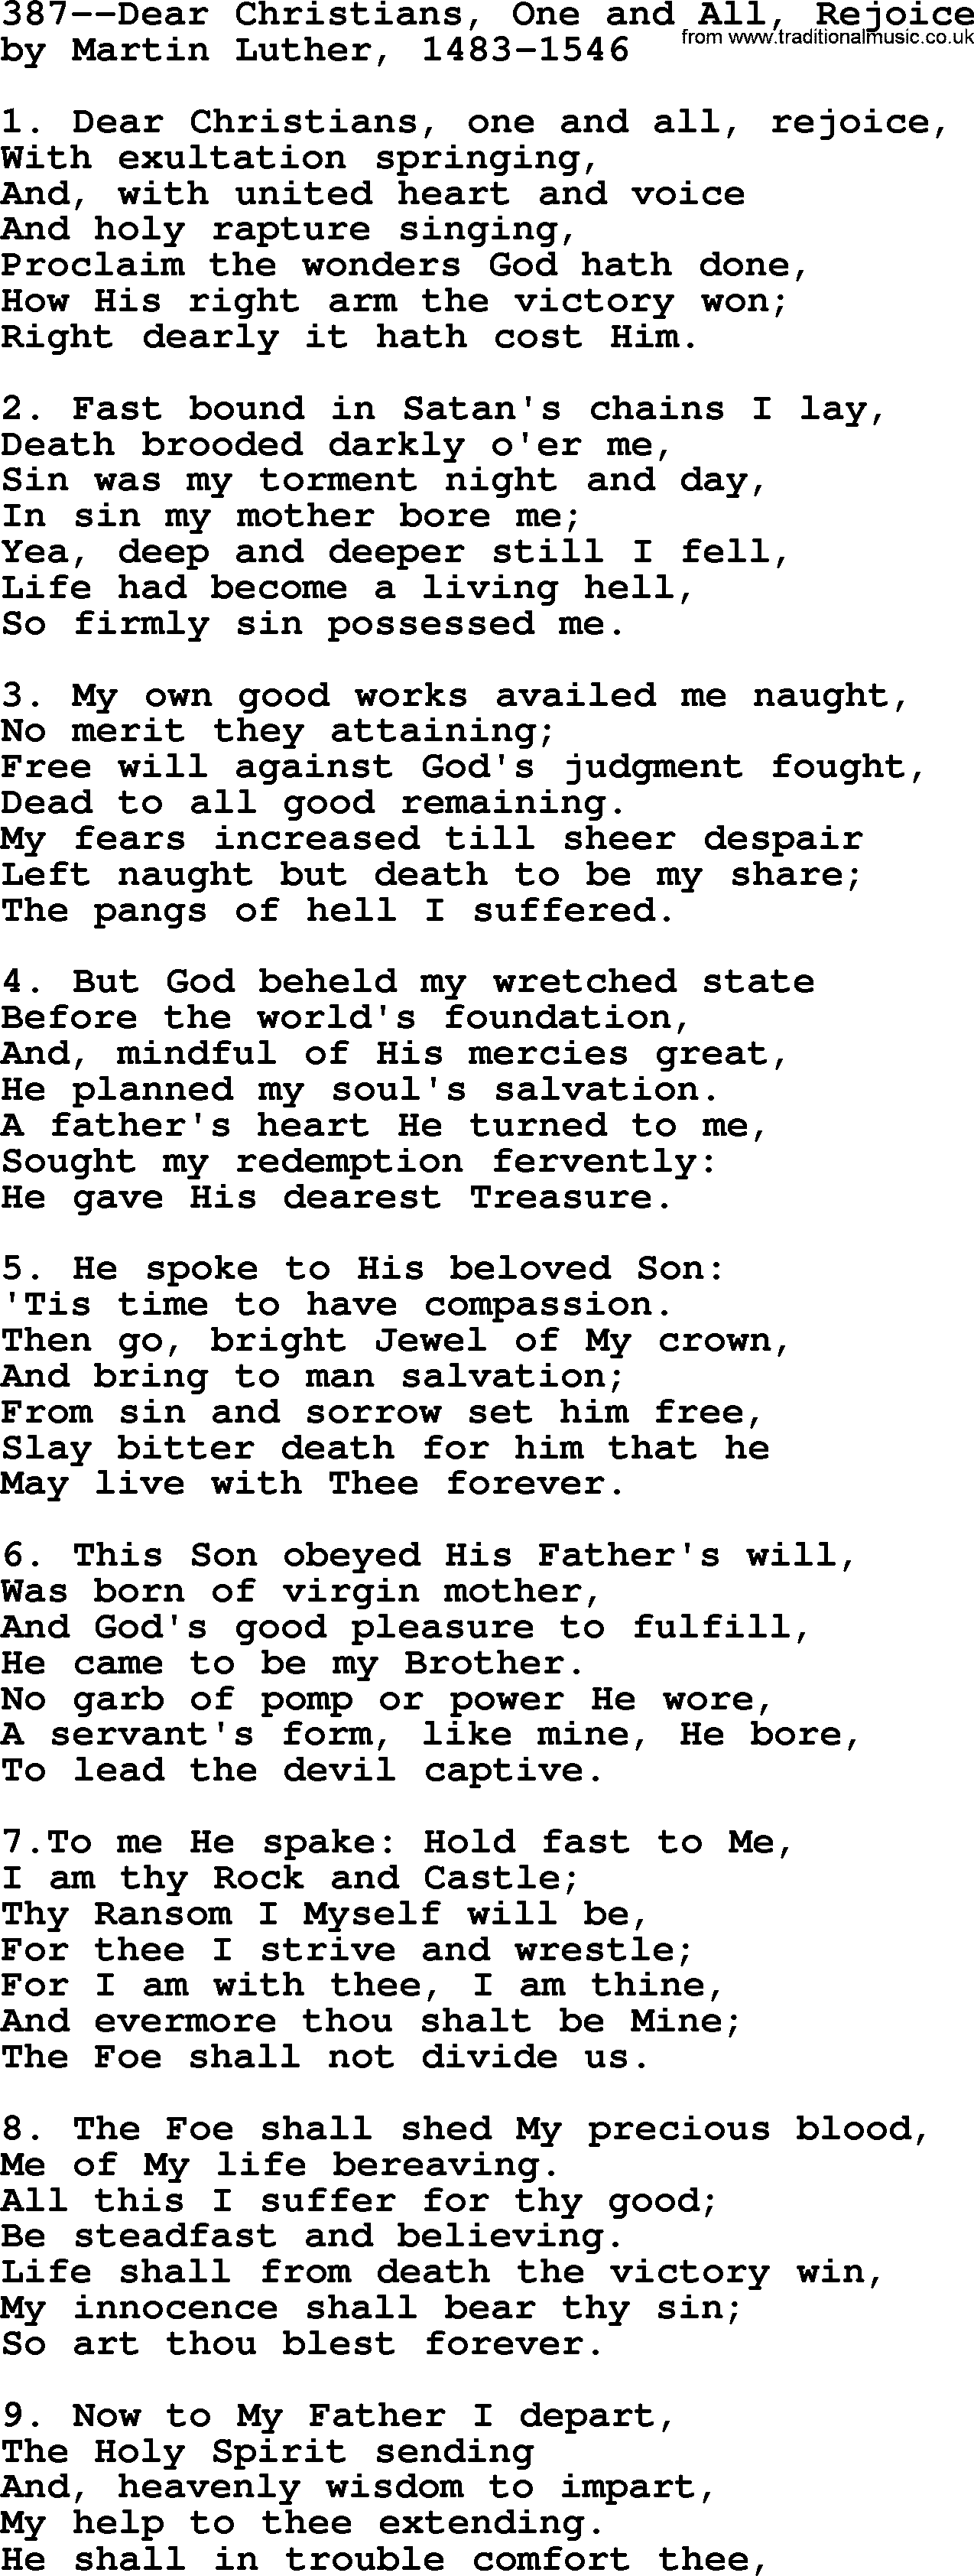 Lutheran Hymn: 387--Dear Christians, One and All, Rejoice.txt lyrics with PDF